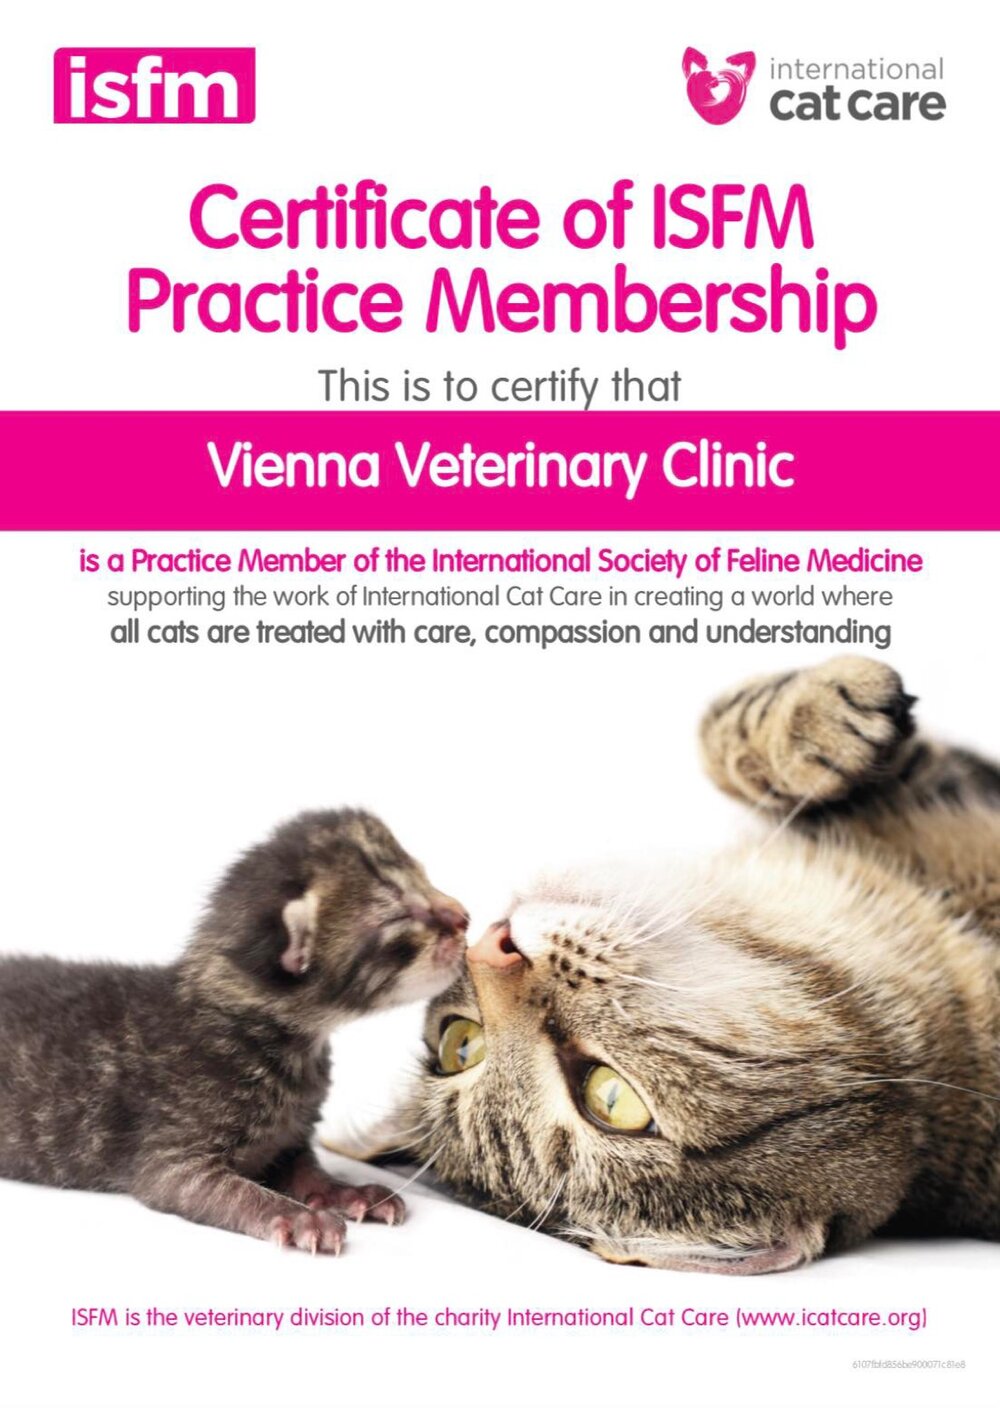 Vienna Veterinary Clinic